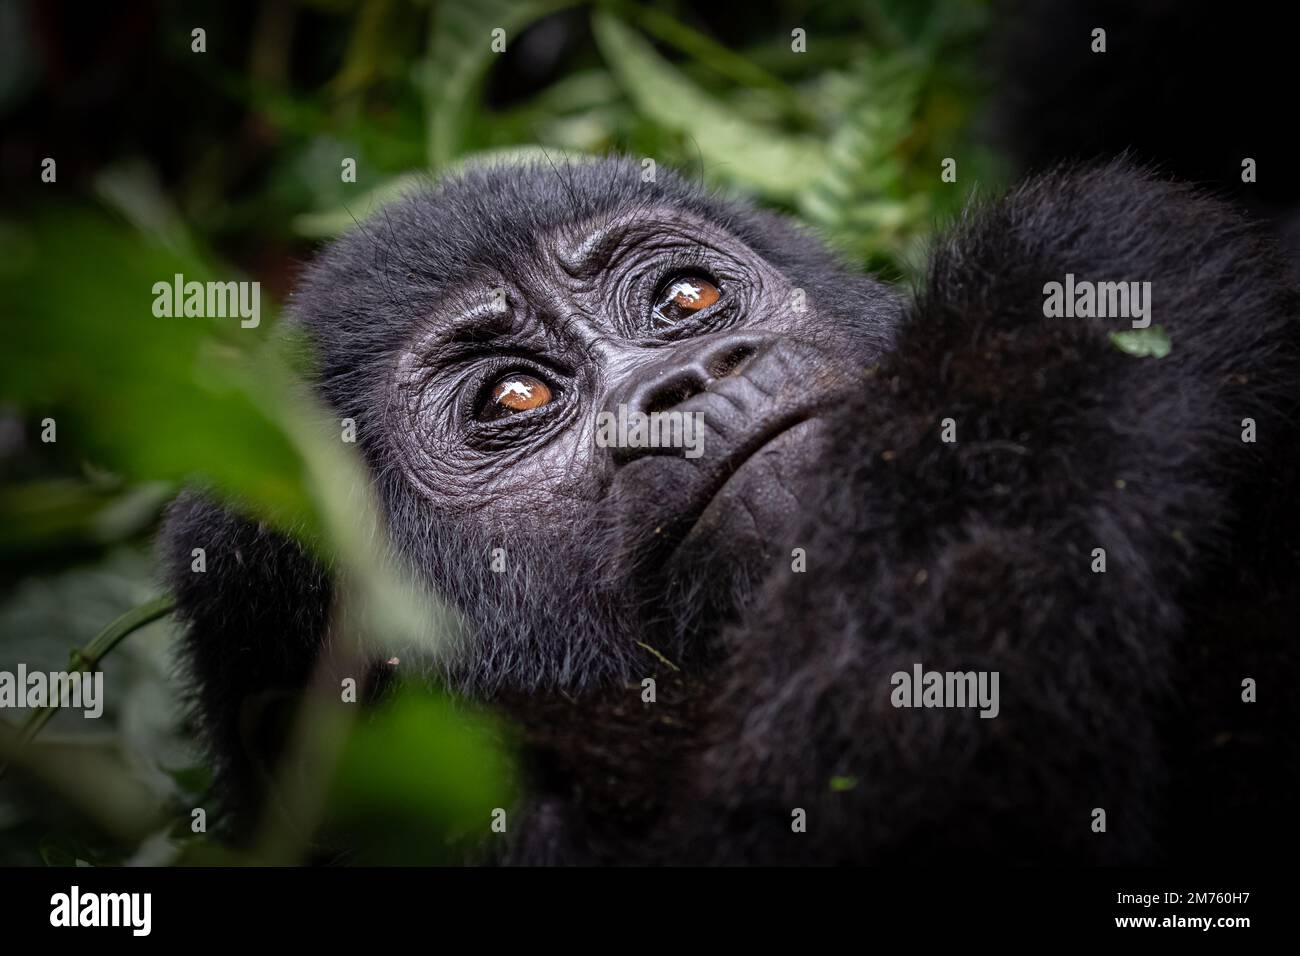 Portrait of a young mountain gorilla (Gorilla beringei beringei) in Uganda's Bwindi Impenetrable Forest. Stock Photo